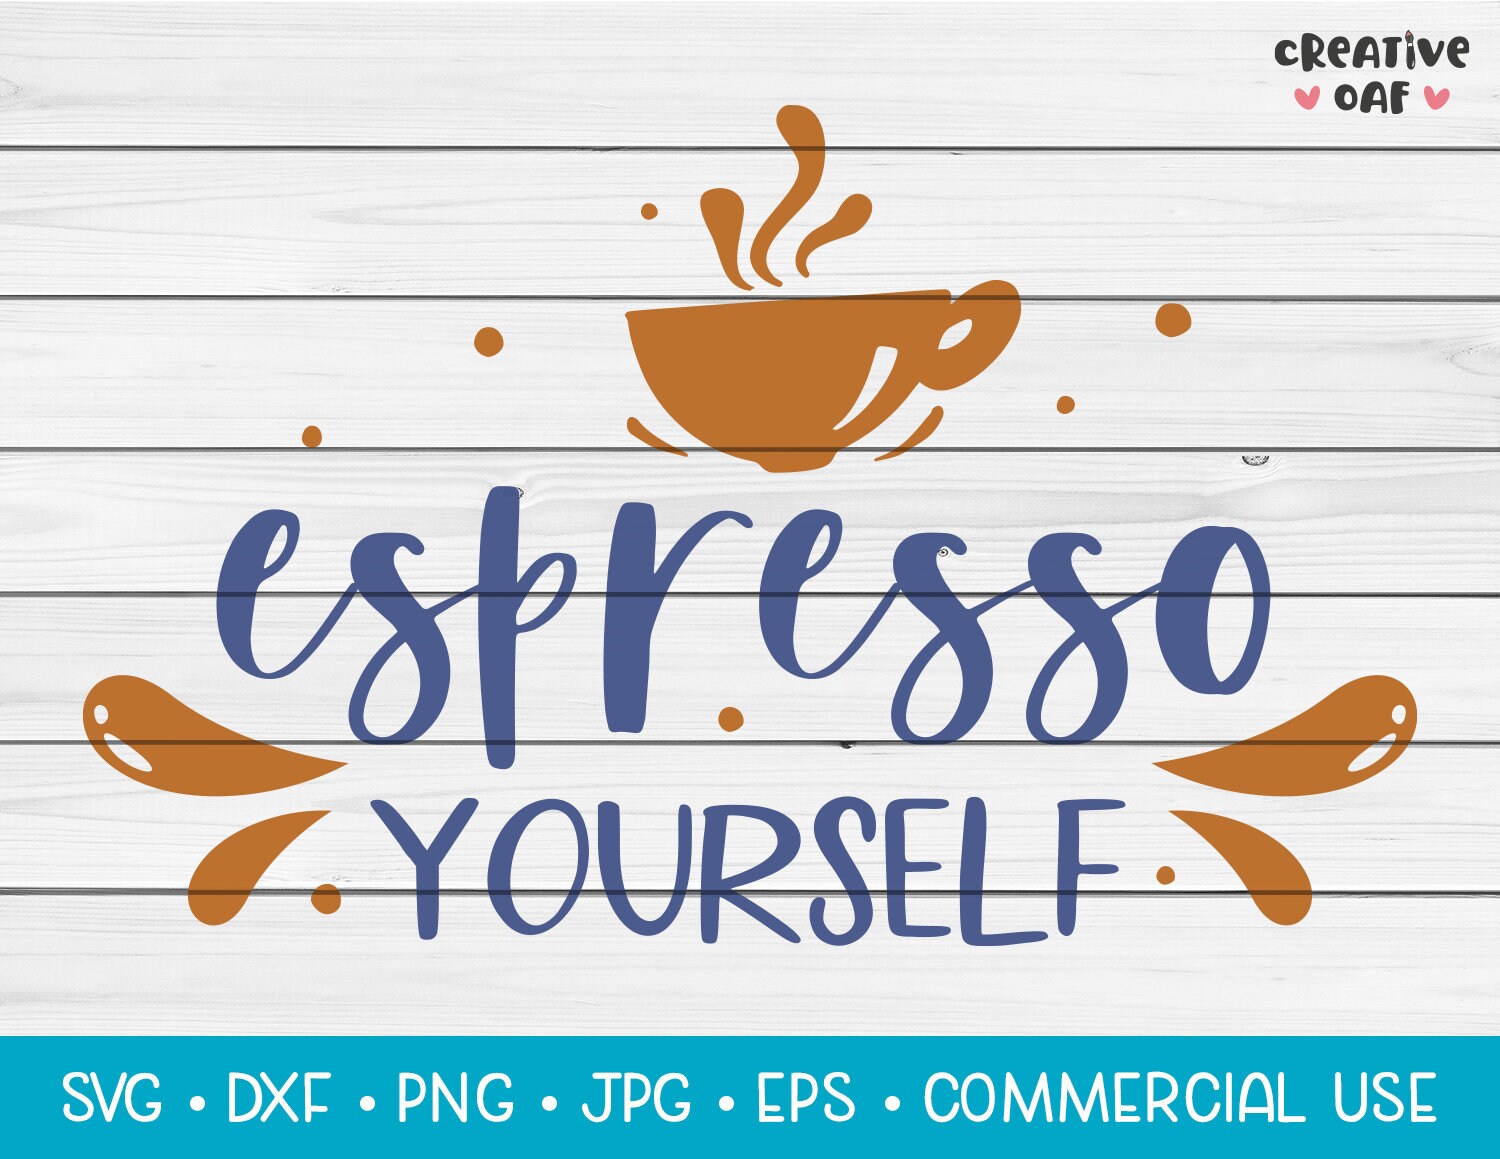 Espresso Yourself Funny Coffee Pun Poster, Zazzle